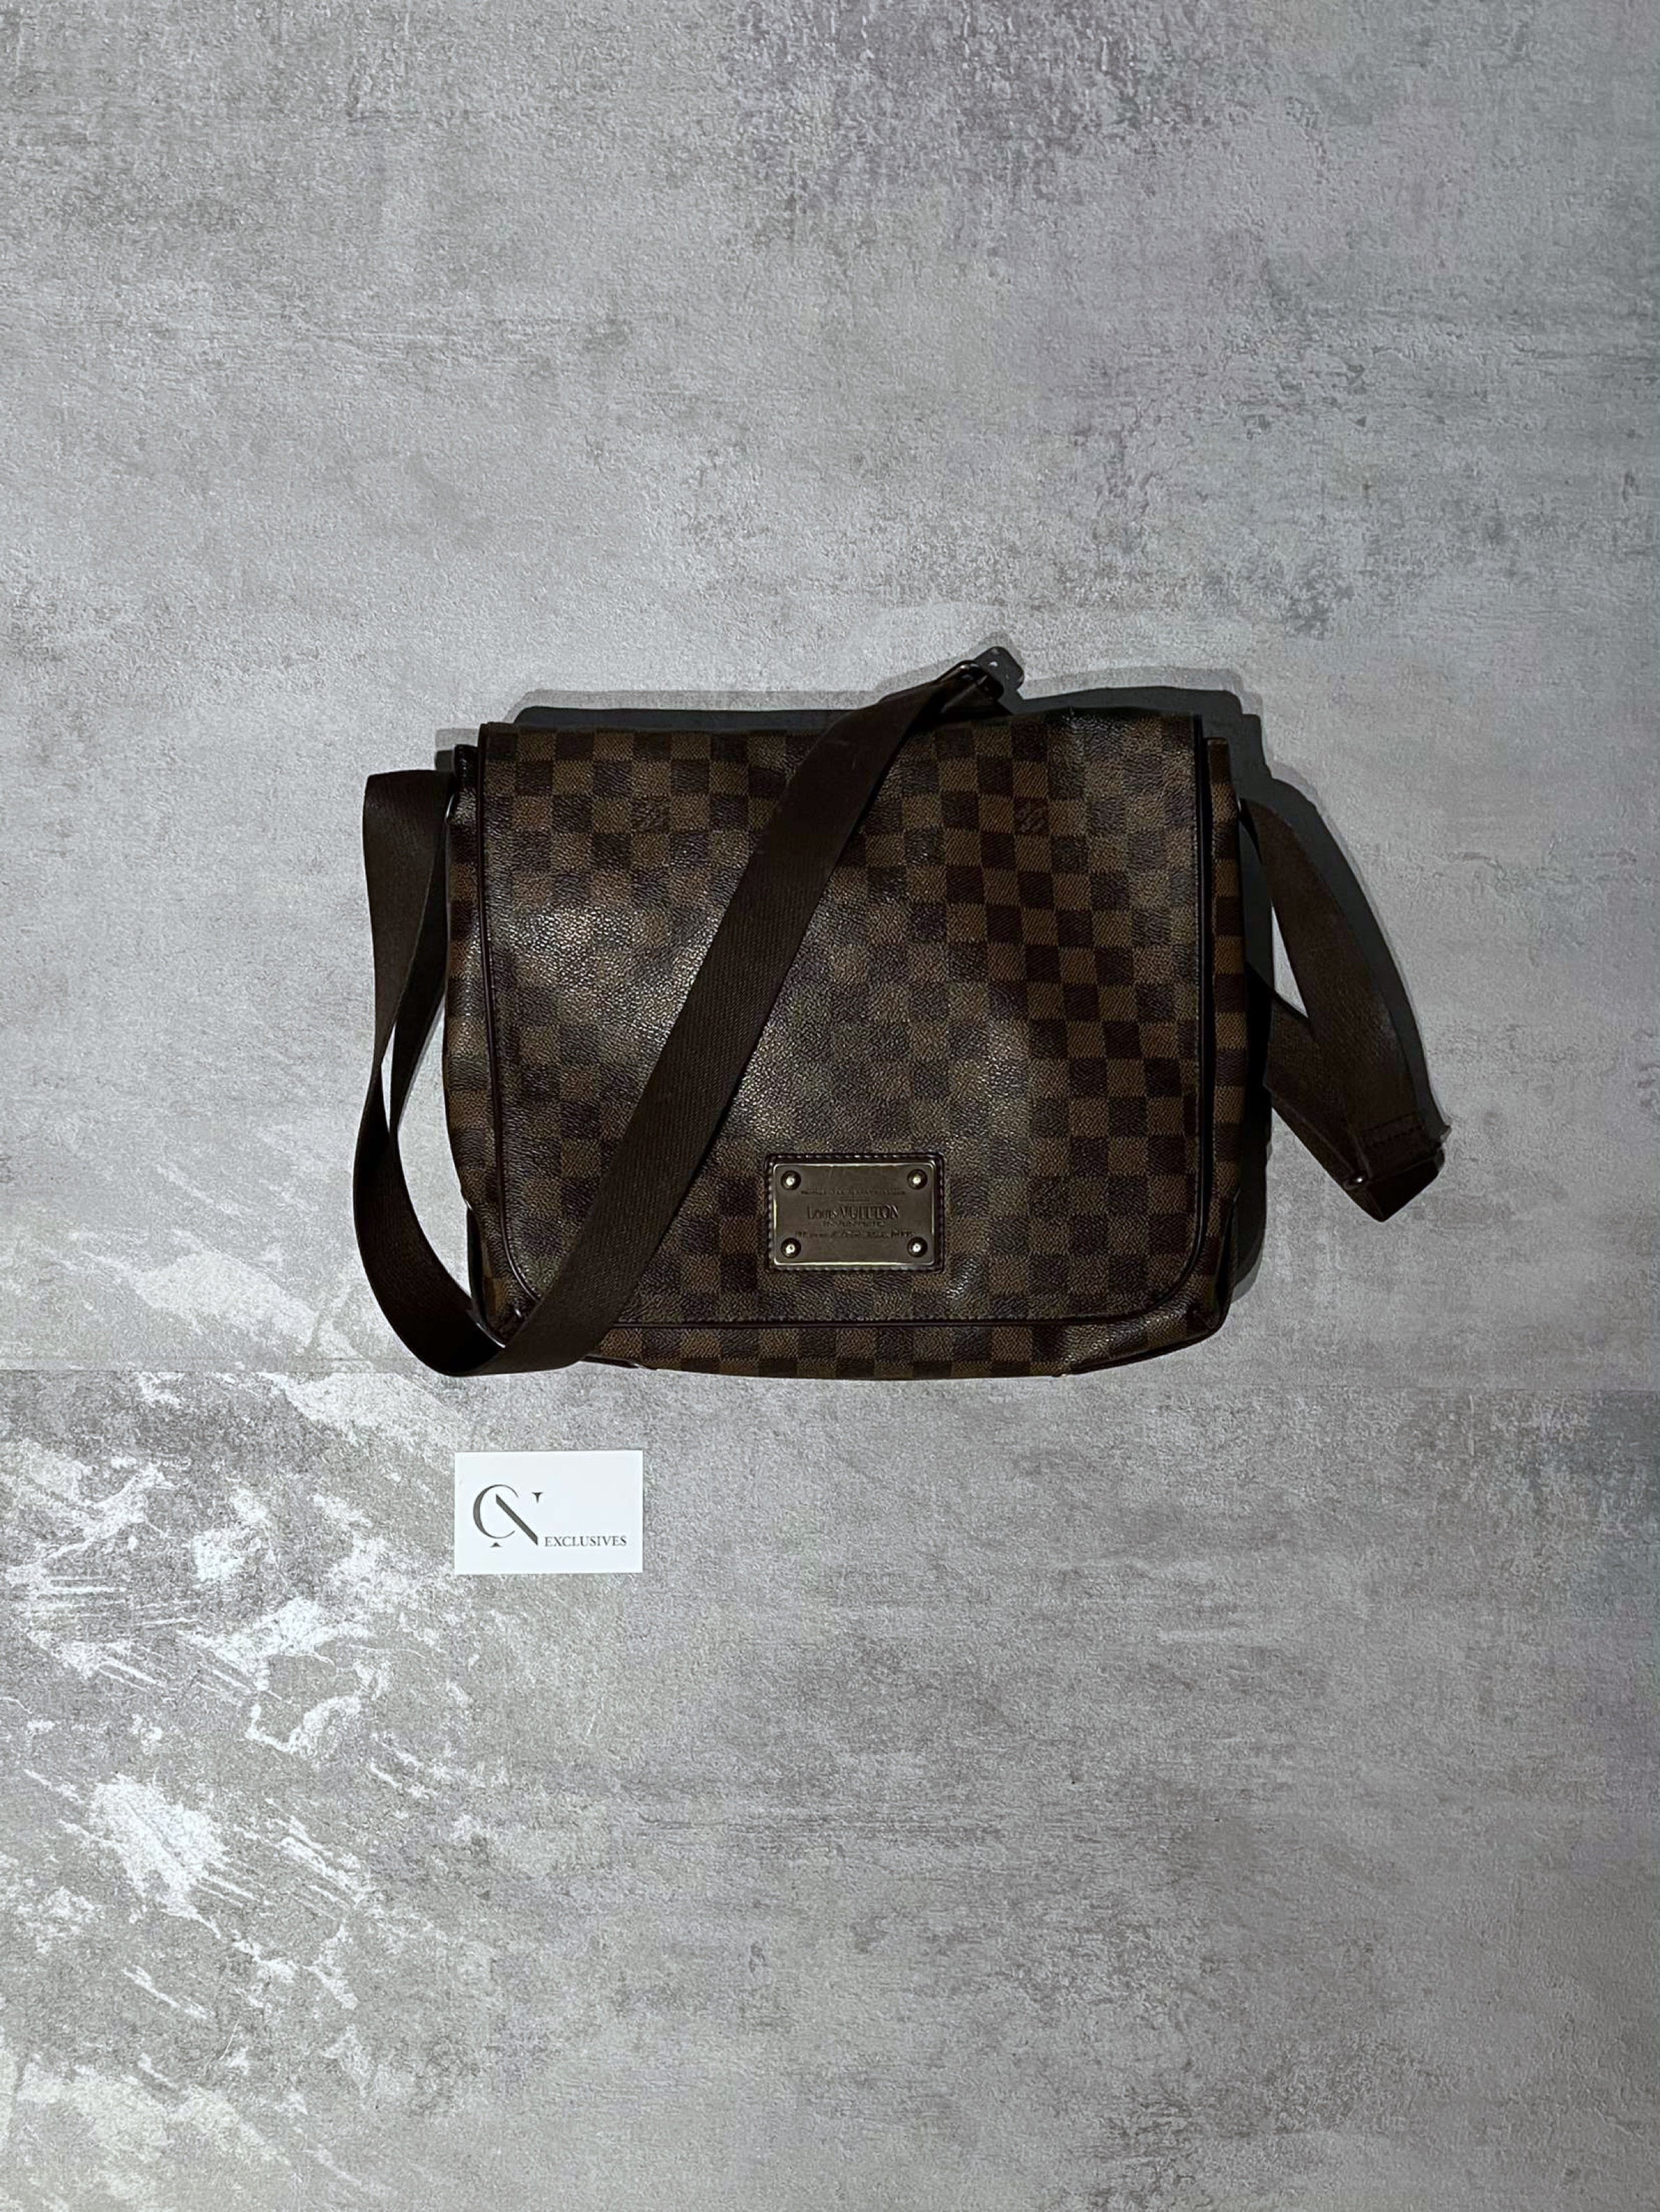 Louis Vuitton Brooklyn MM Damier Ebene Coated Canvas Messenger Bag on SALE